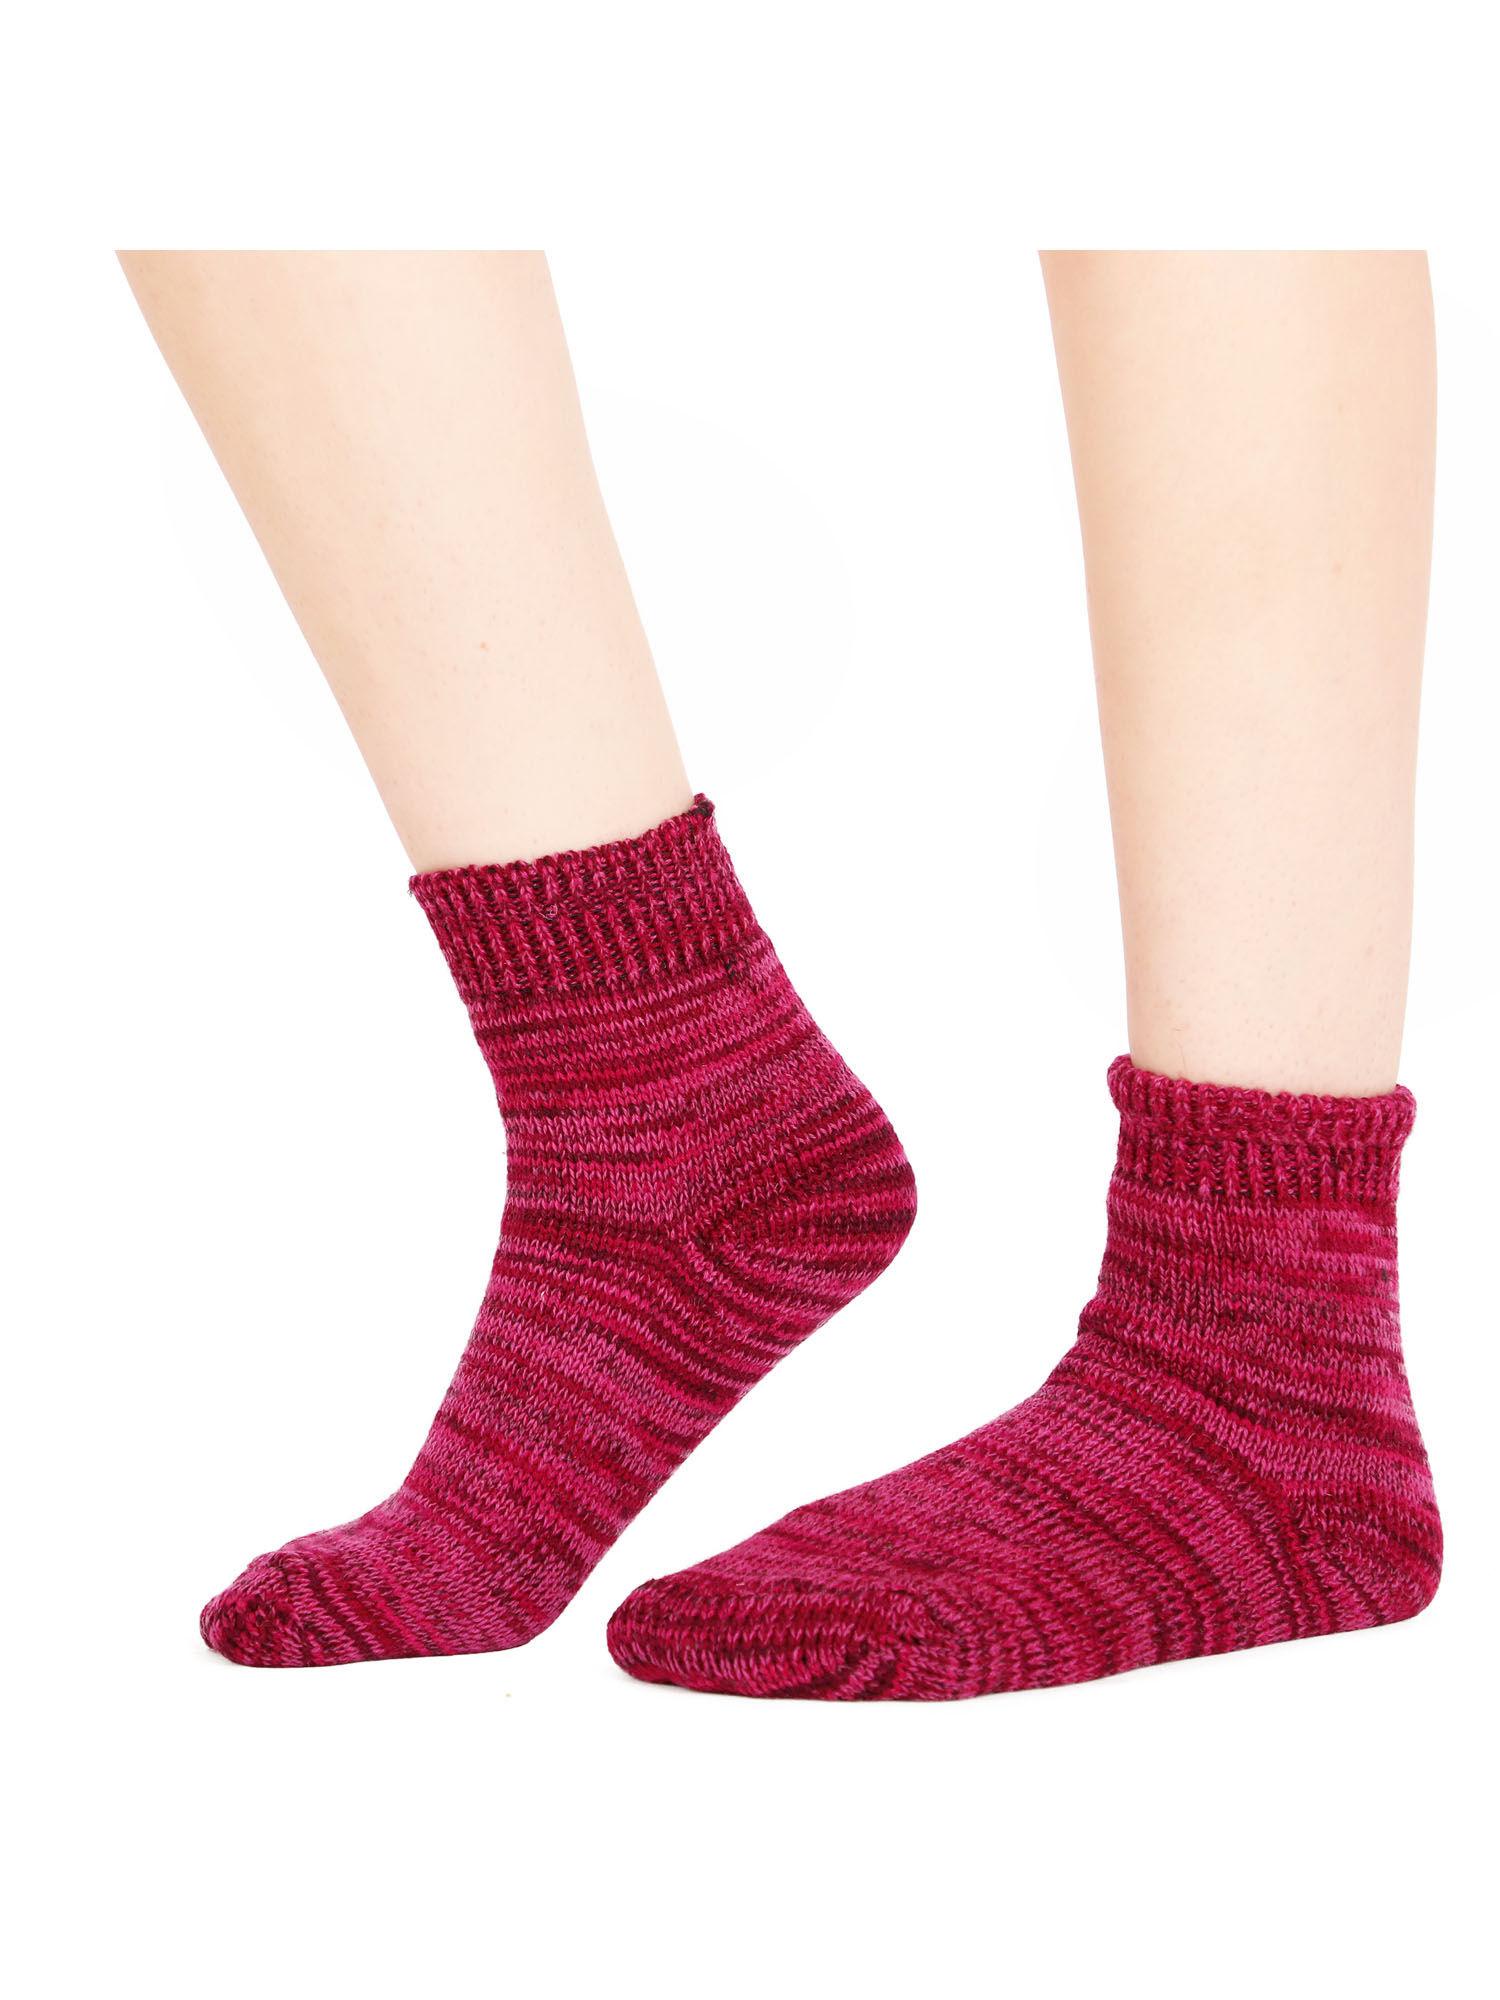 handknitted soft woolen mid-calf length thermal socks